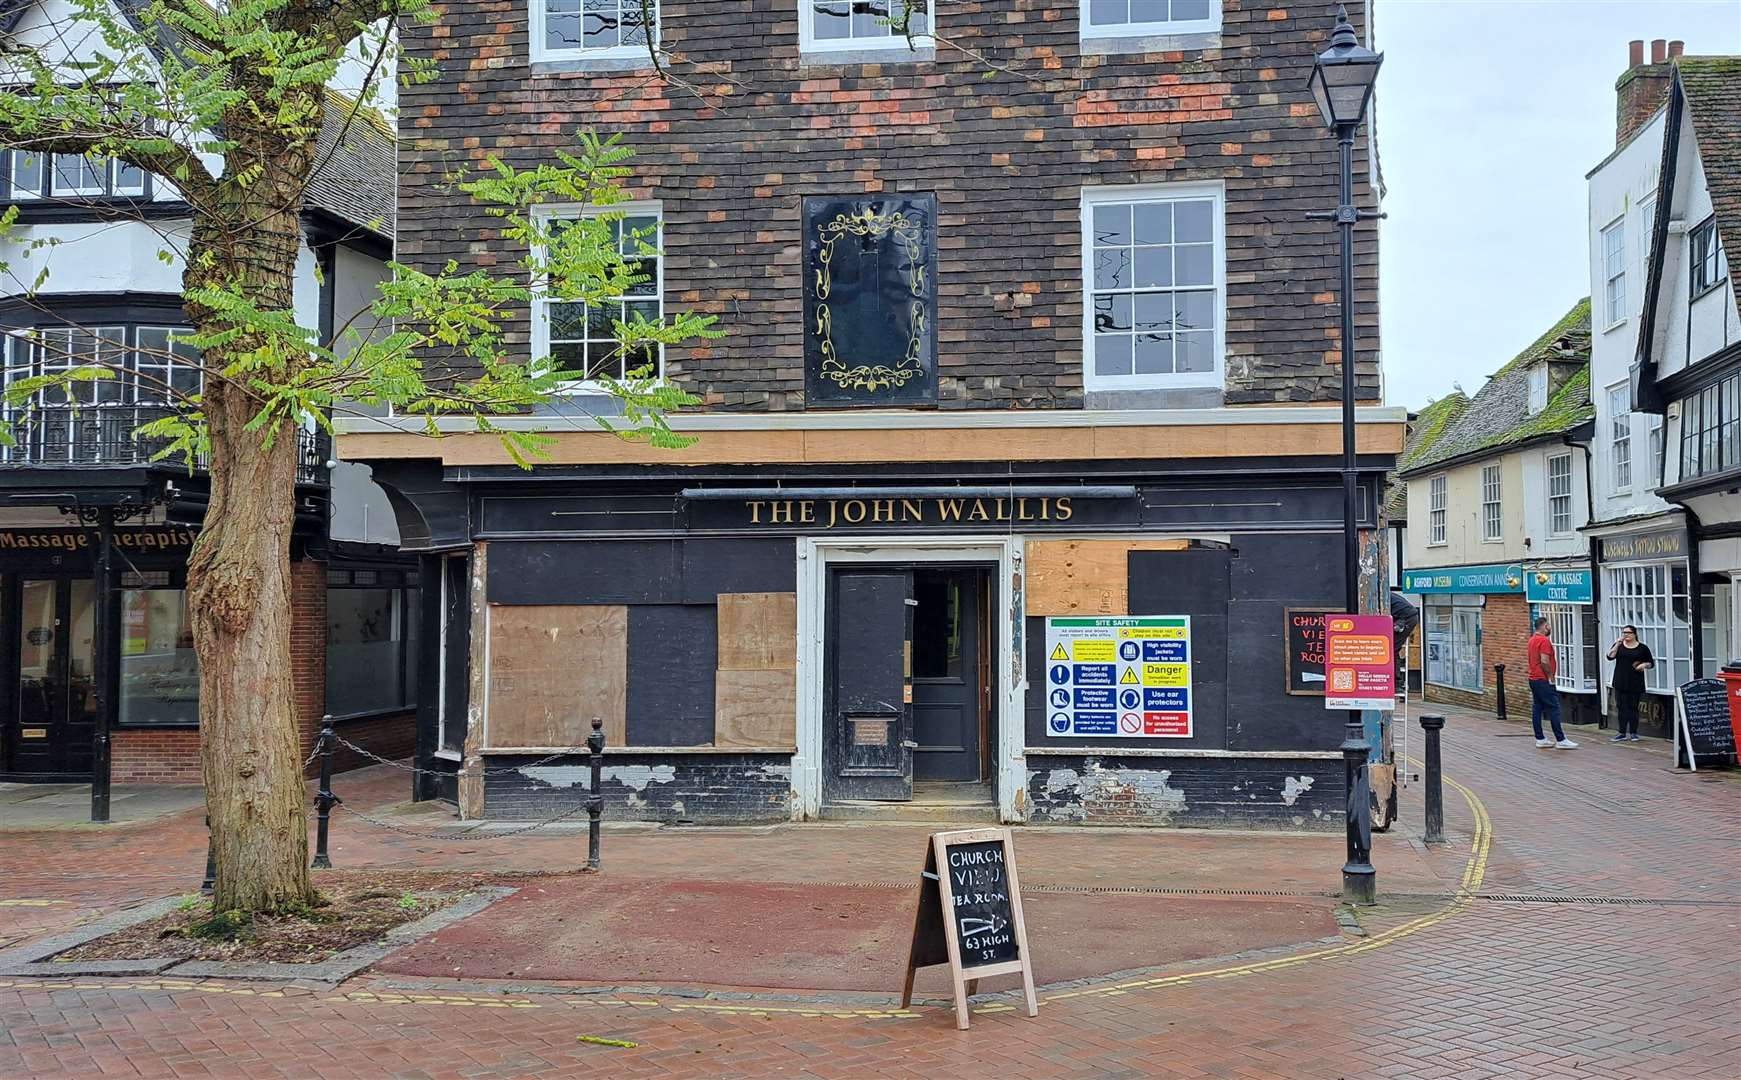 The John Wallis pub in Middle Row, Ashford, has been shut since 2020